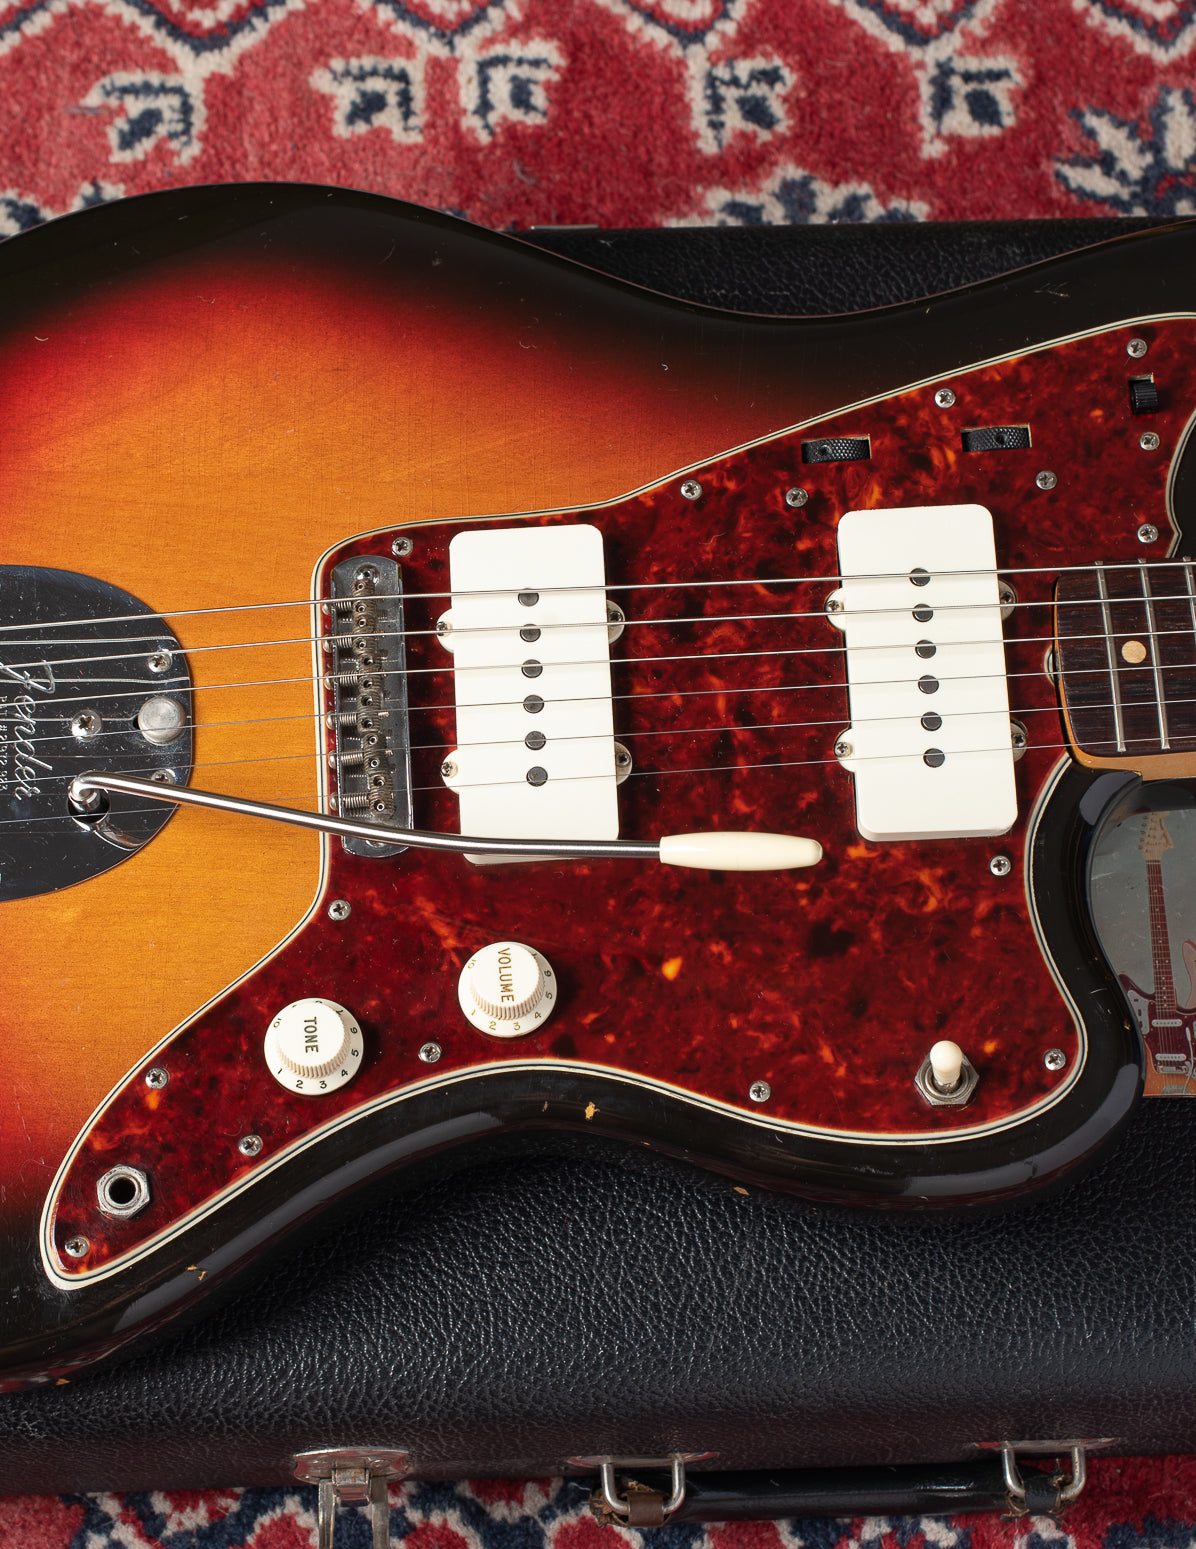 Body of 1964 Fender Jazzmaster on case